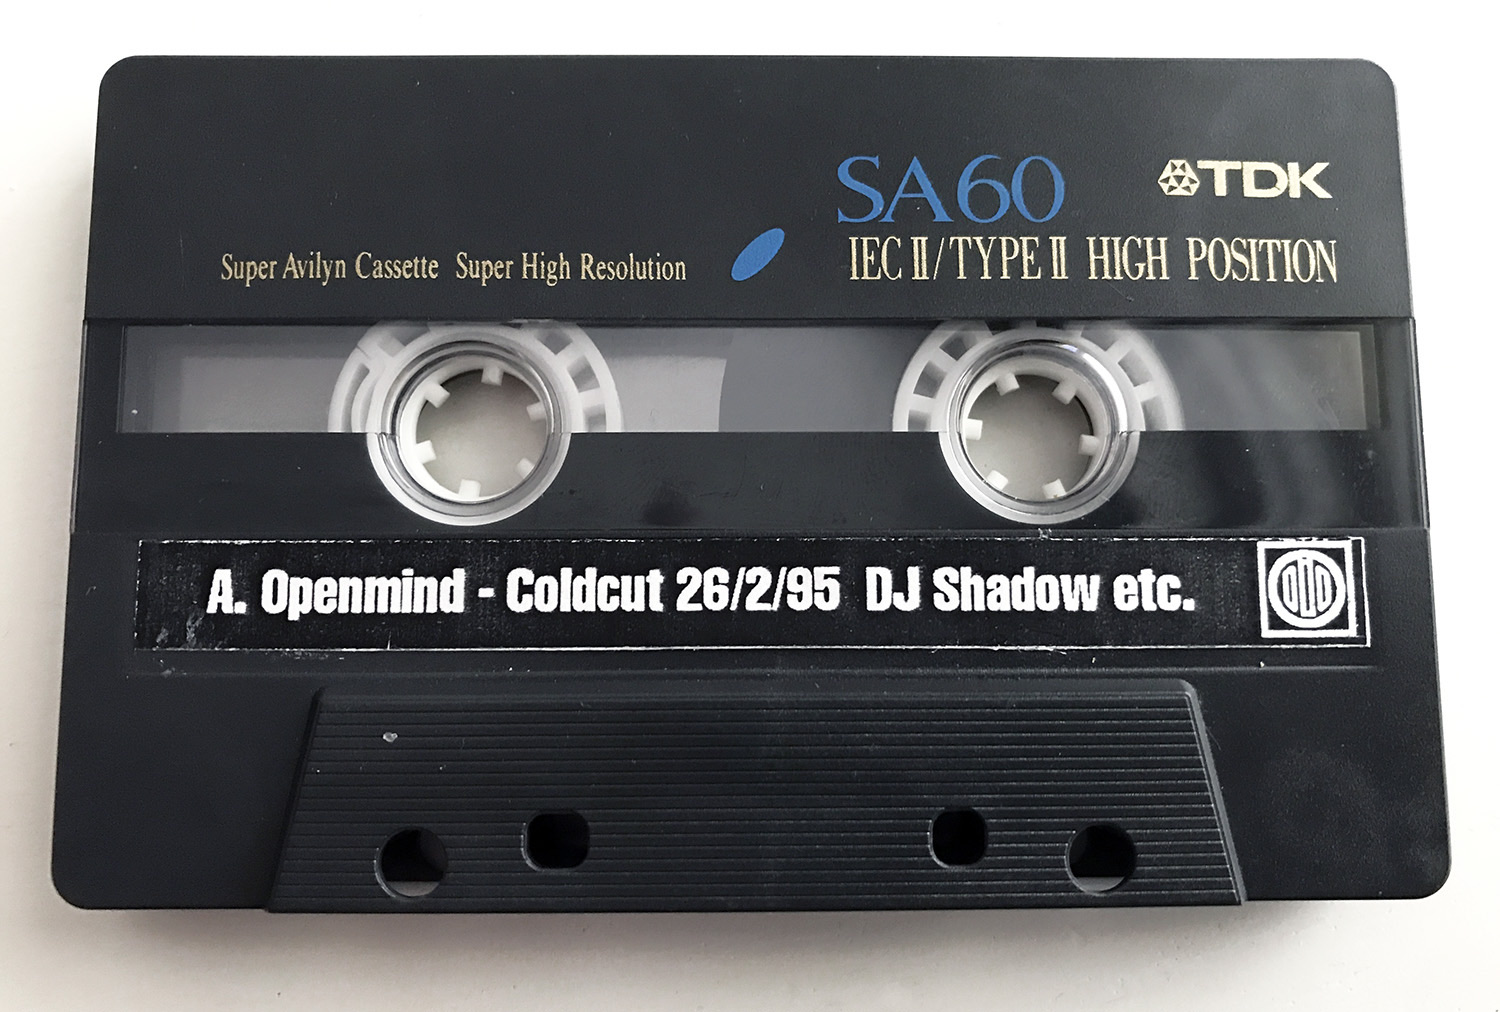 MS181 tape